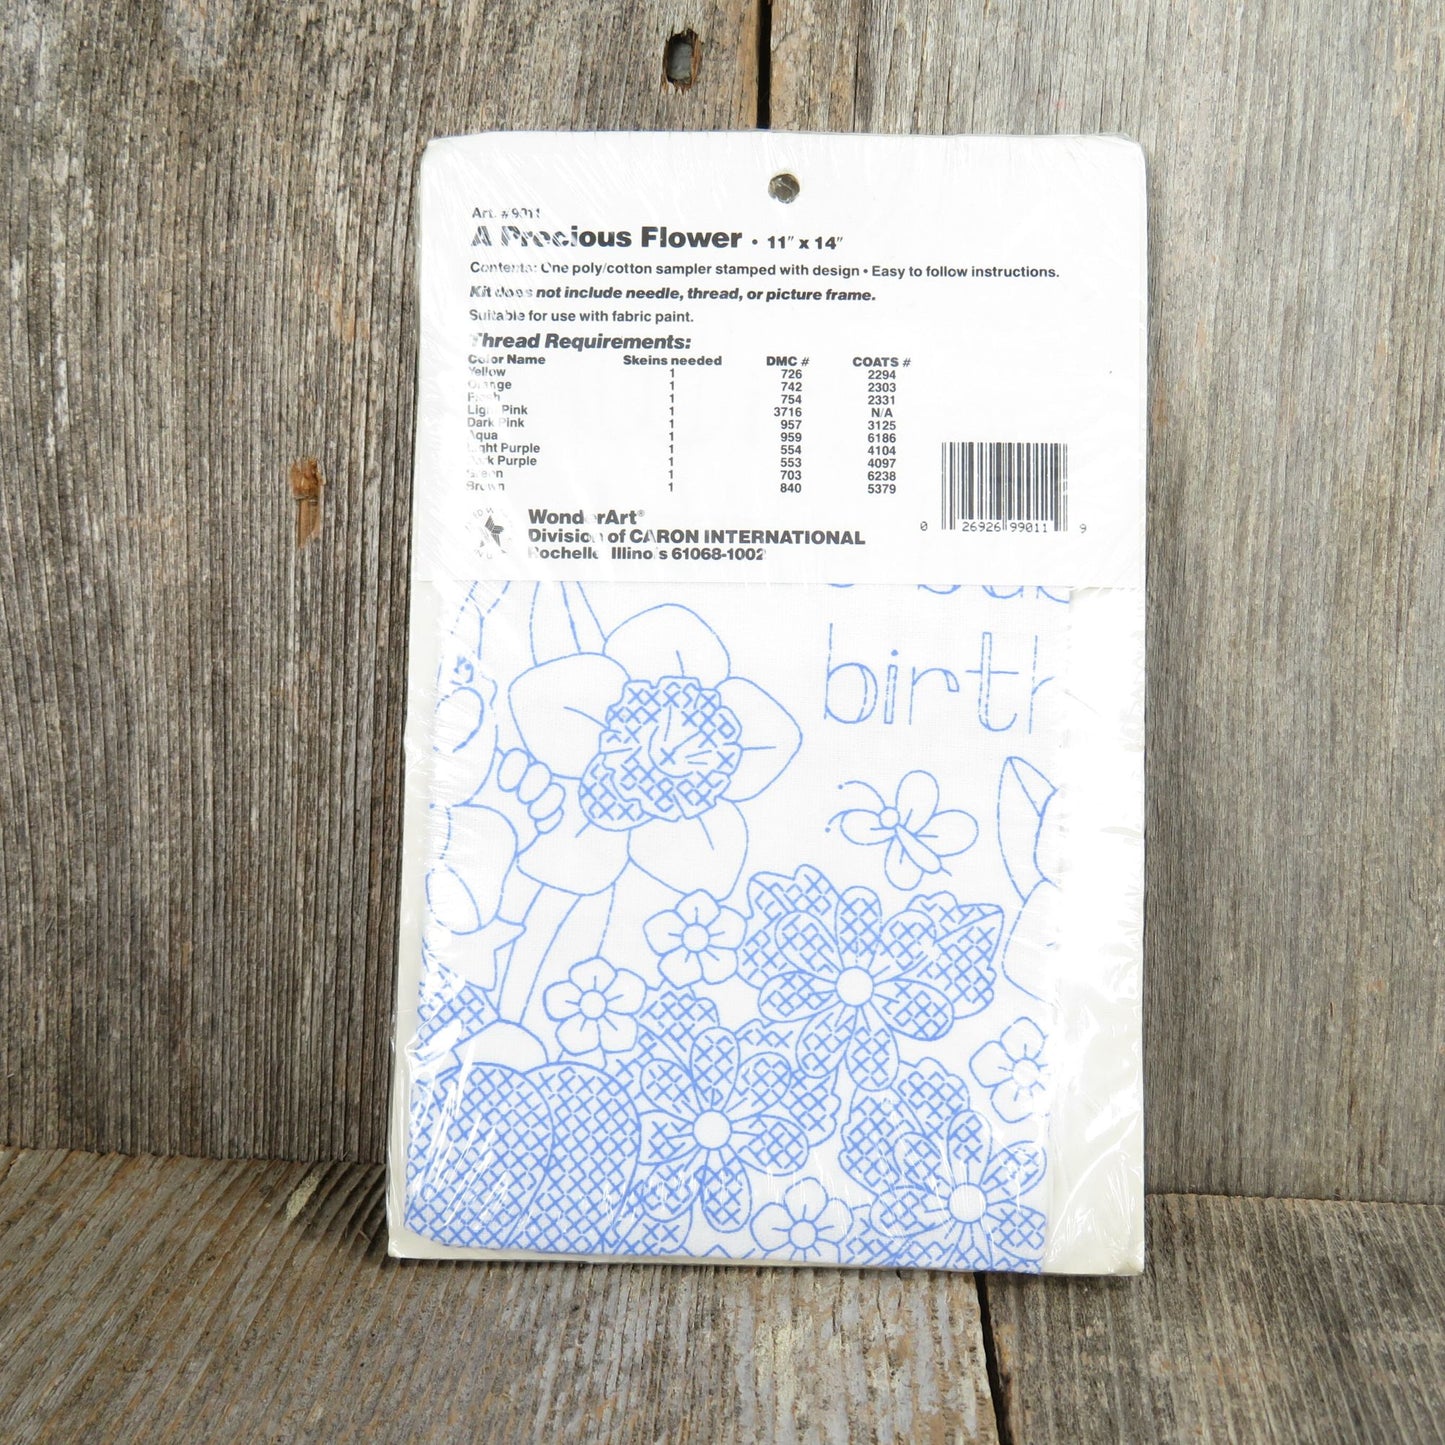 Stamped Embroidery Kit Floral Sampler Wonder Art Baby Birth Gift Needlecraft Housewarming